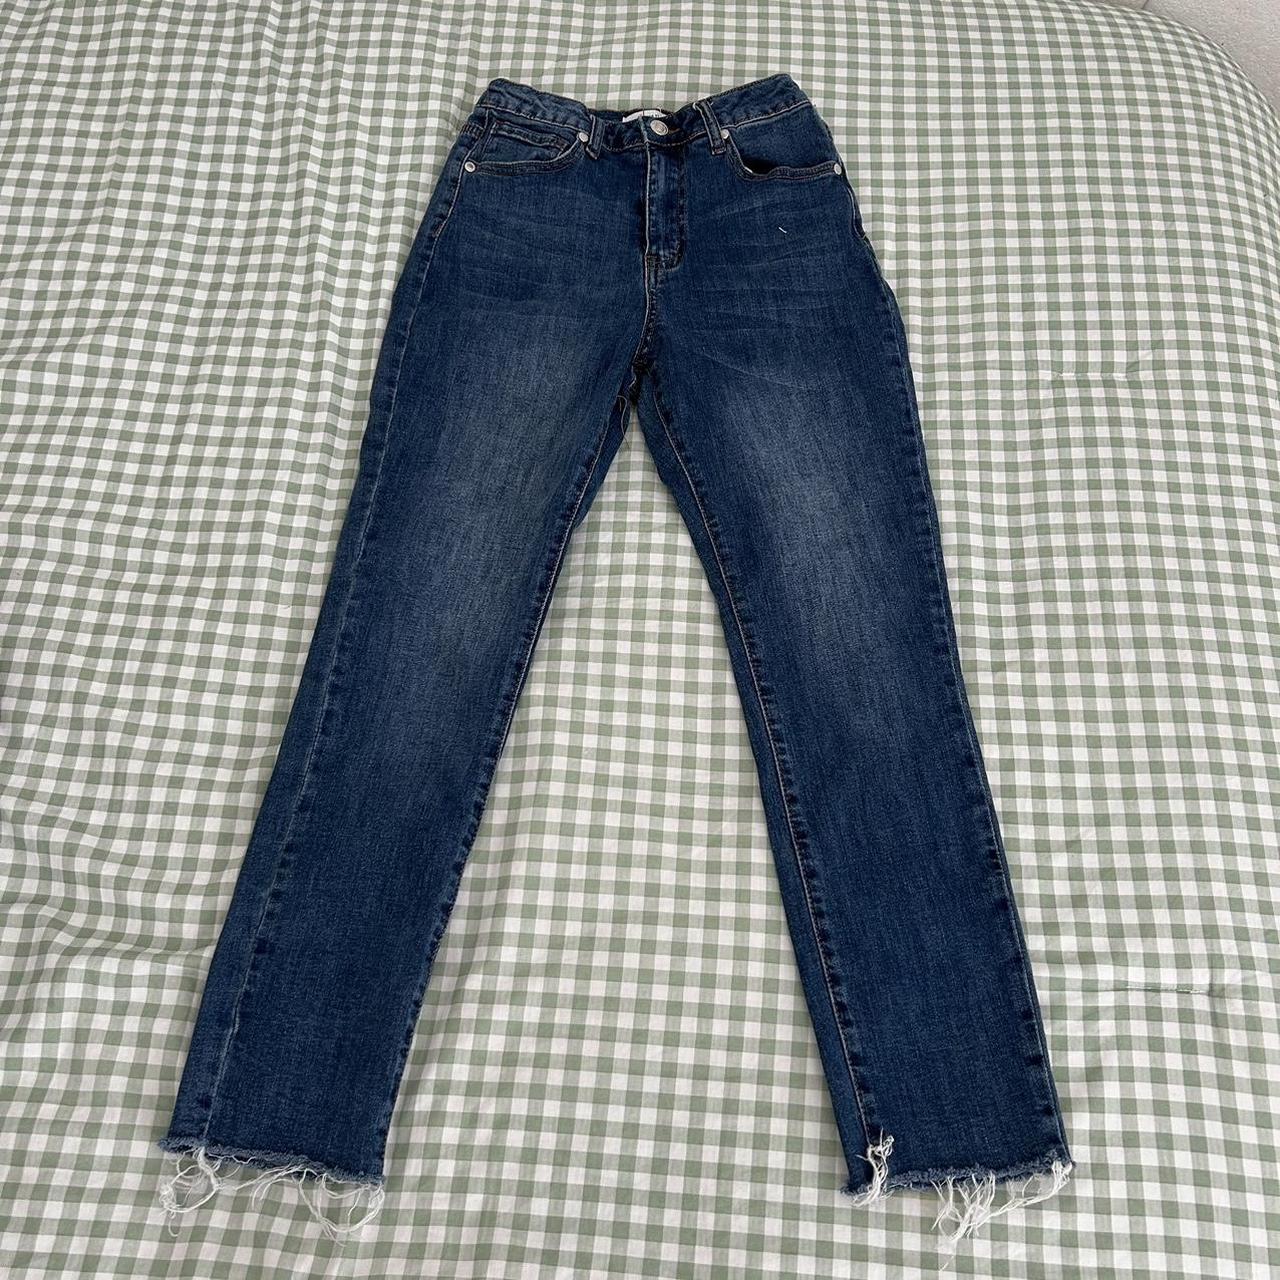 Light blue jeans with frayed bottoms. Never worn. I... - Depop